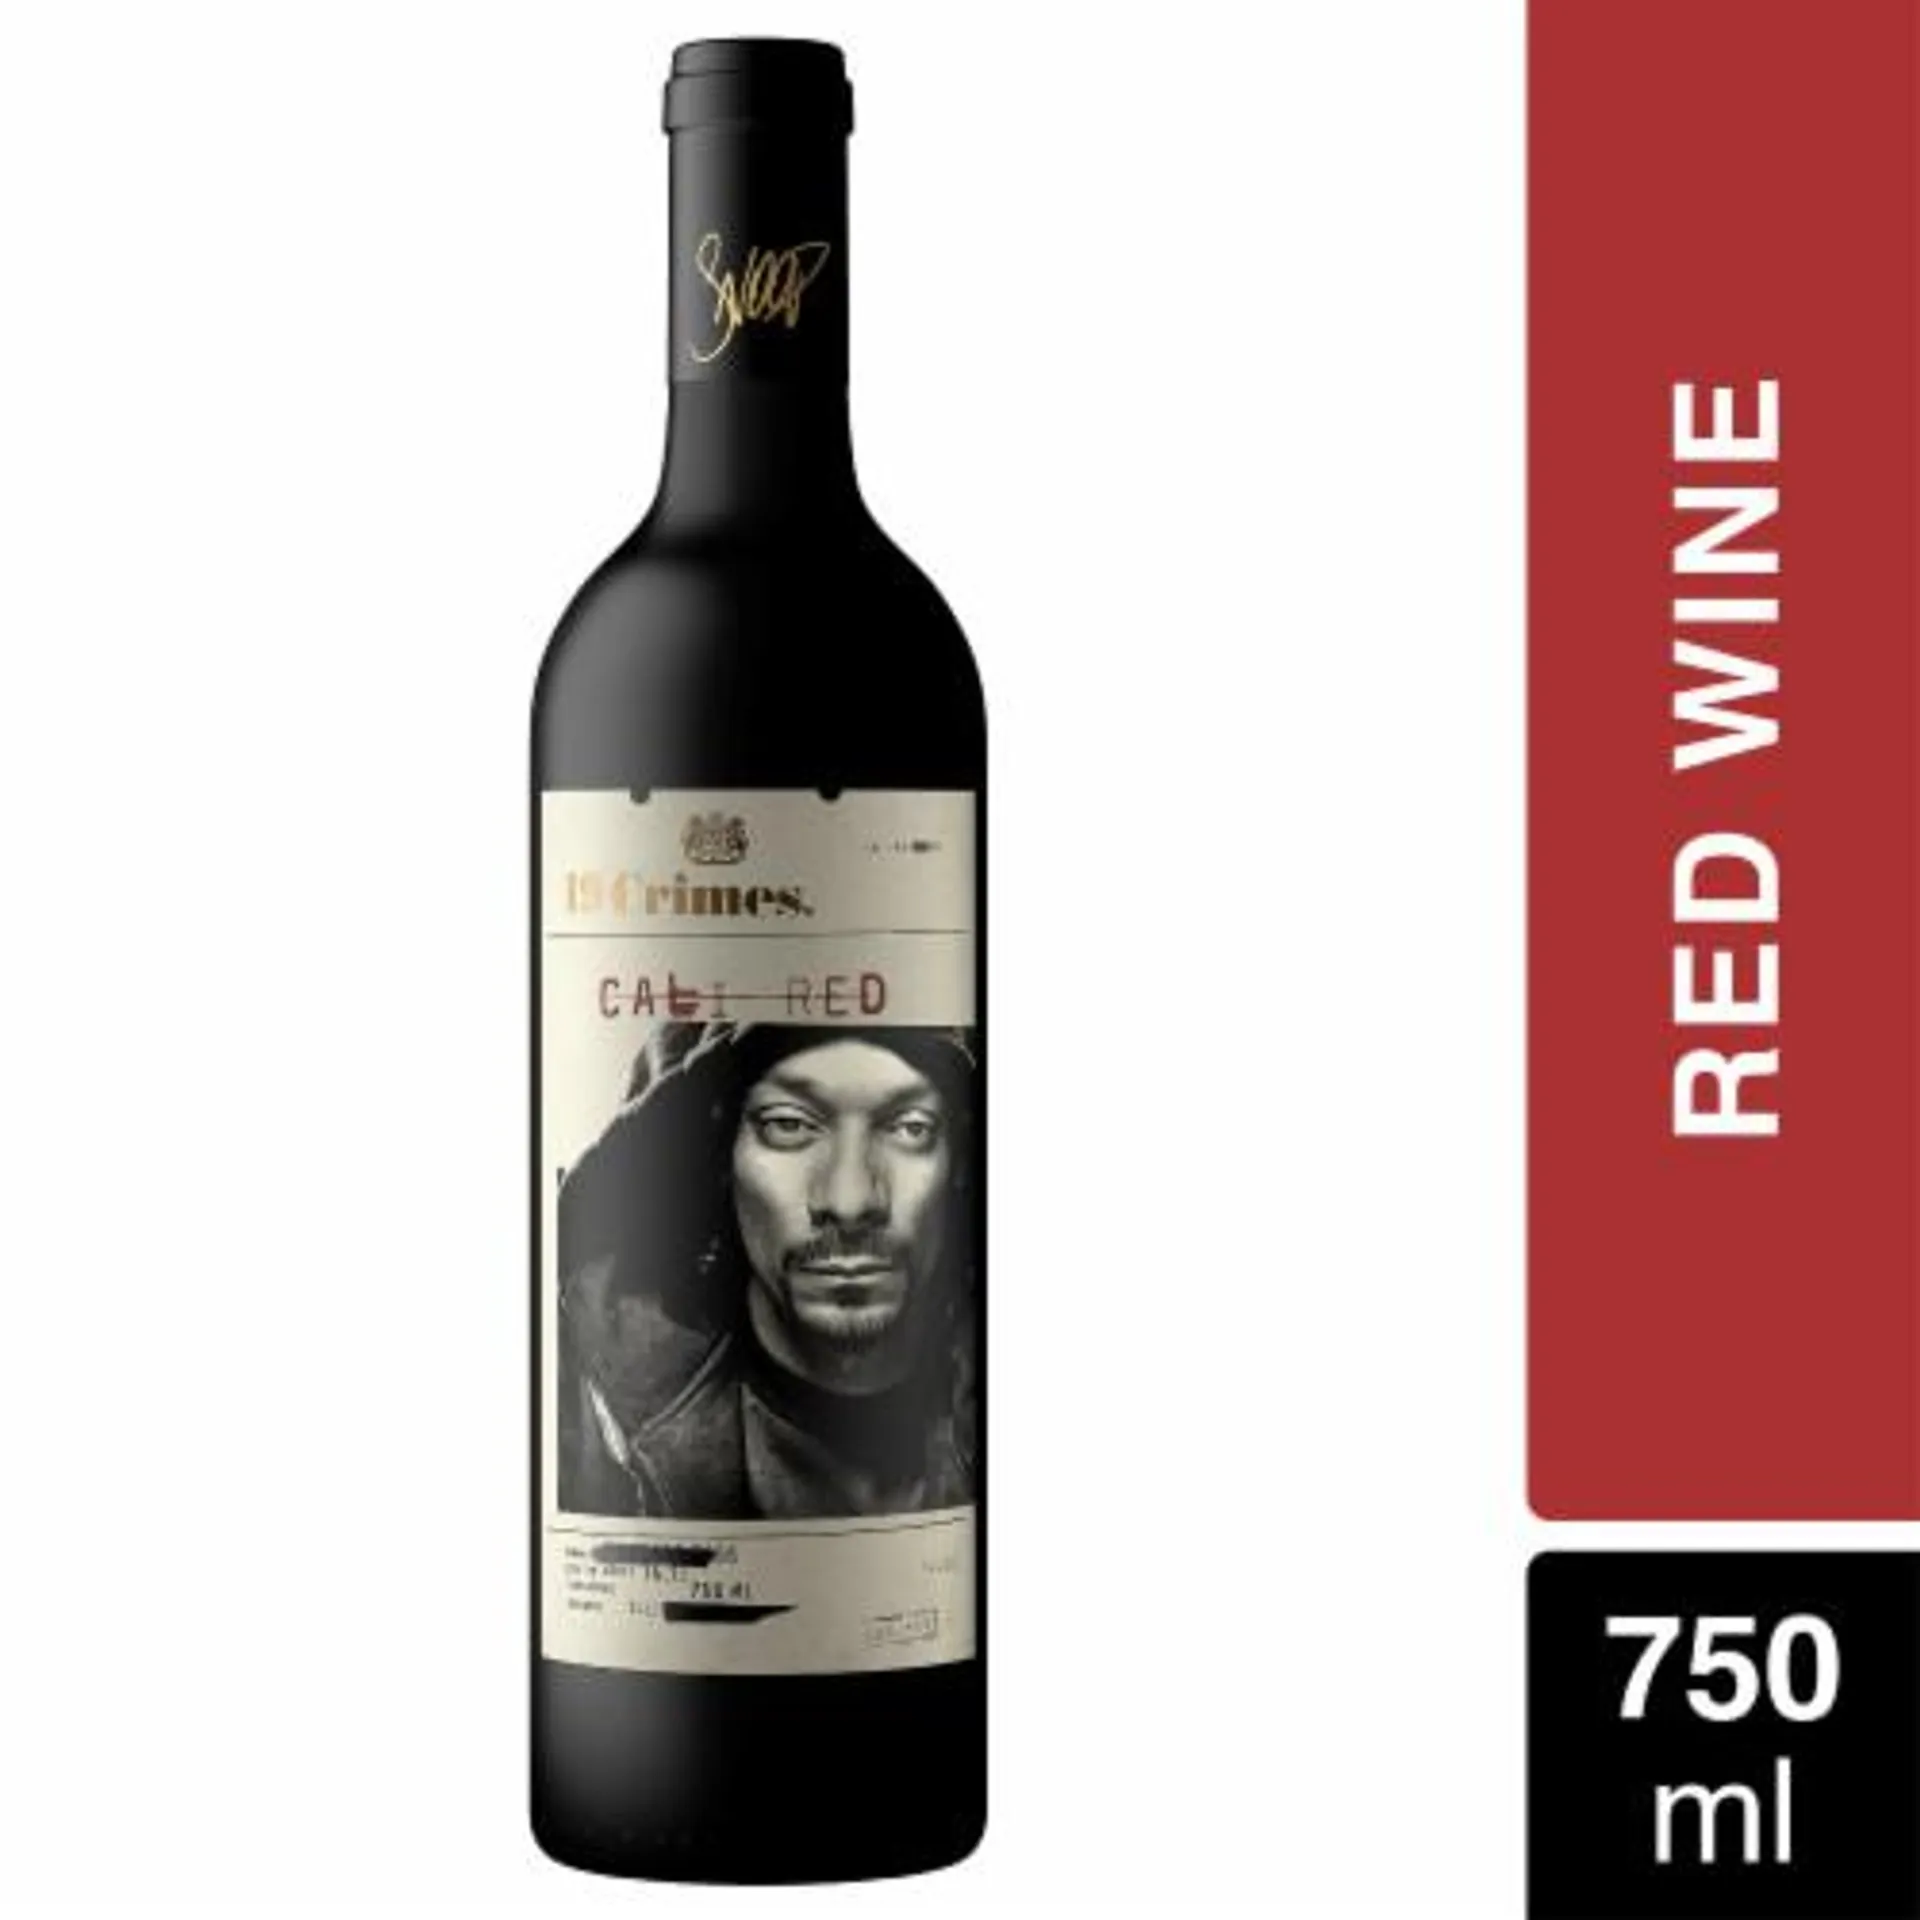 19 Crimes Snoop Dogg Cali Red Wine